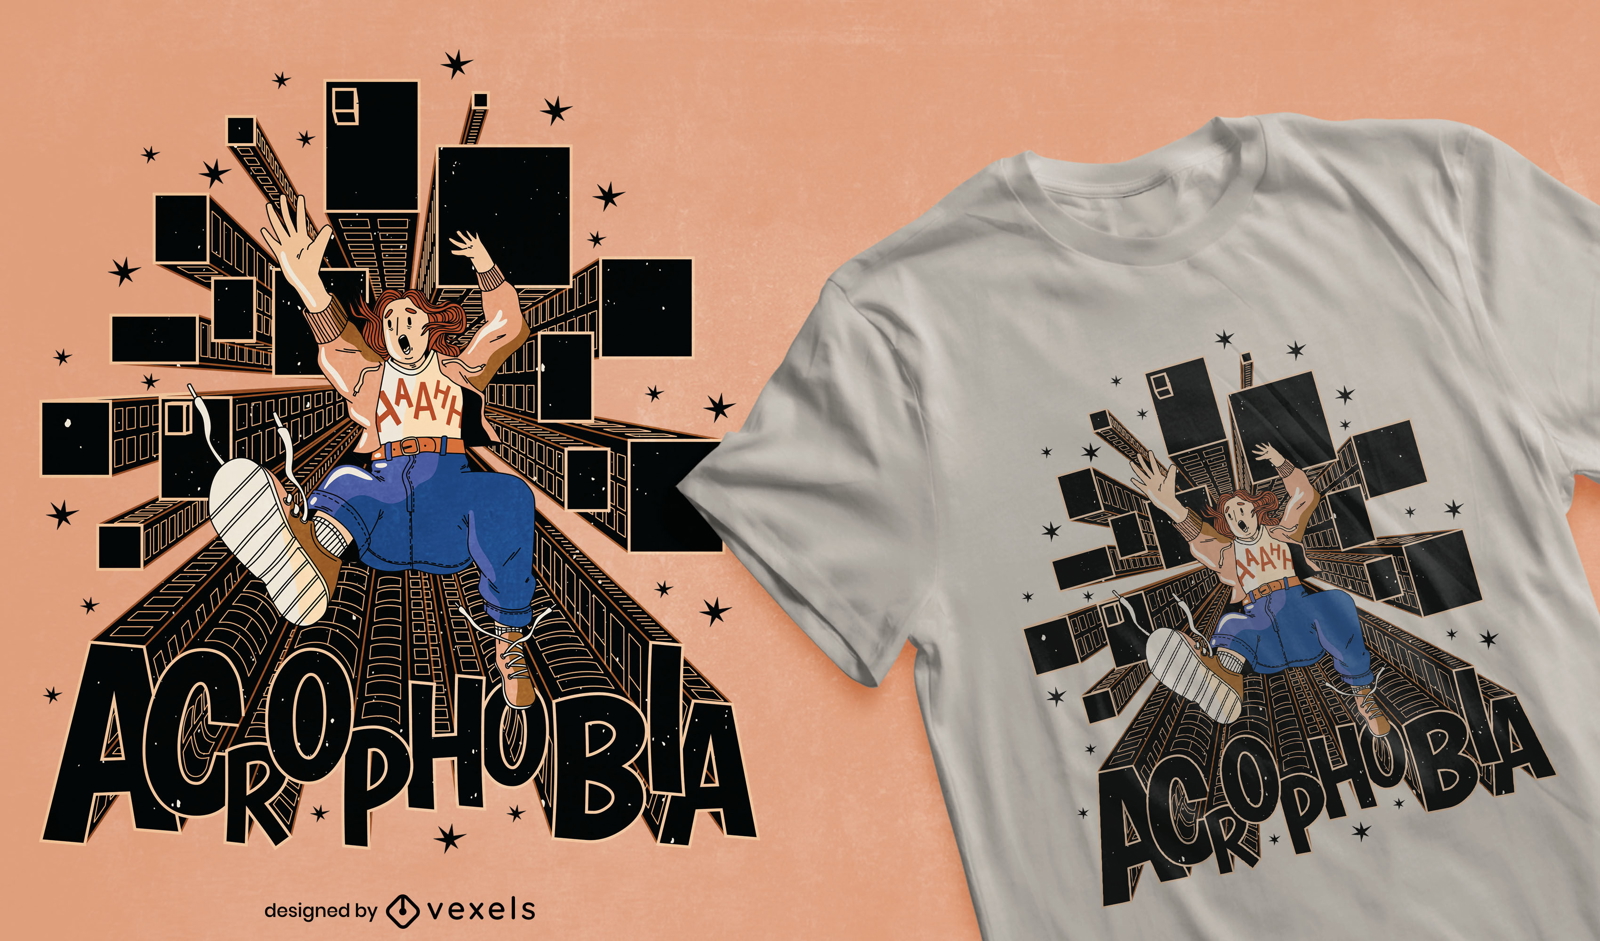 Cool acrophobia t-shirt design 